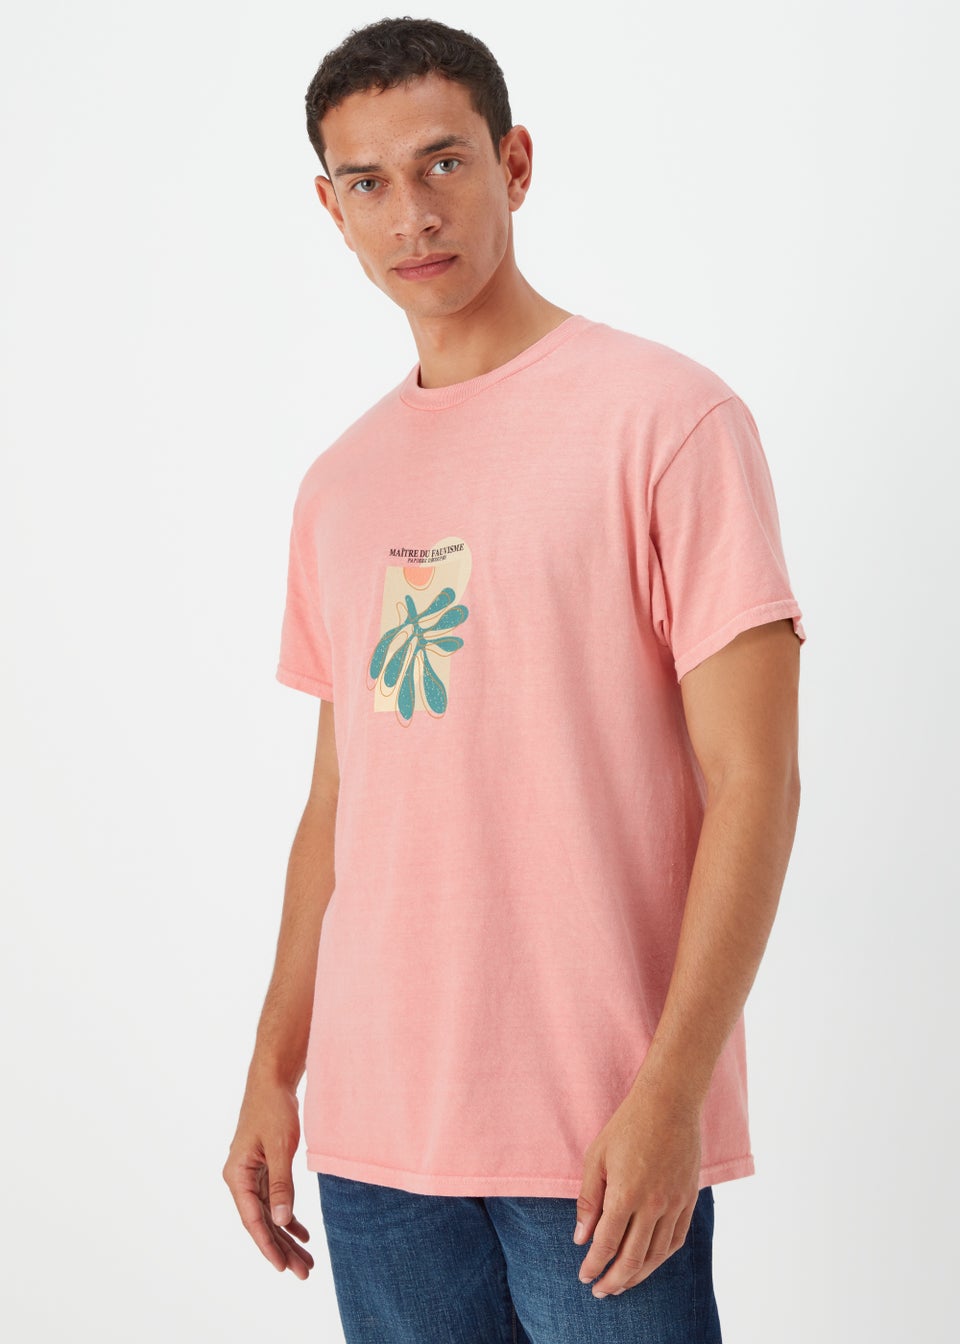 Coral Henri Matisse T-Shirt